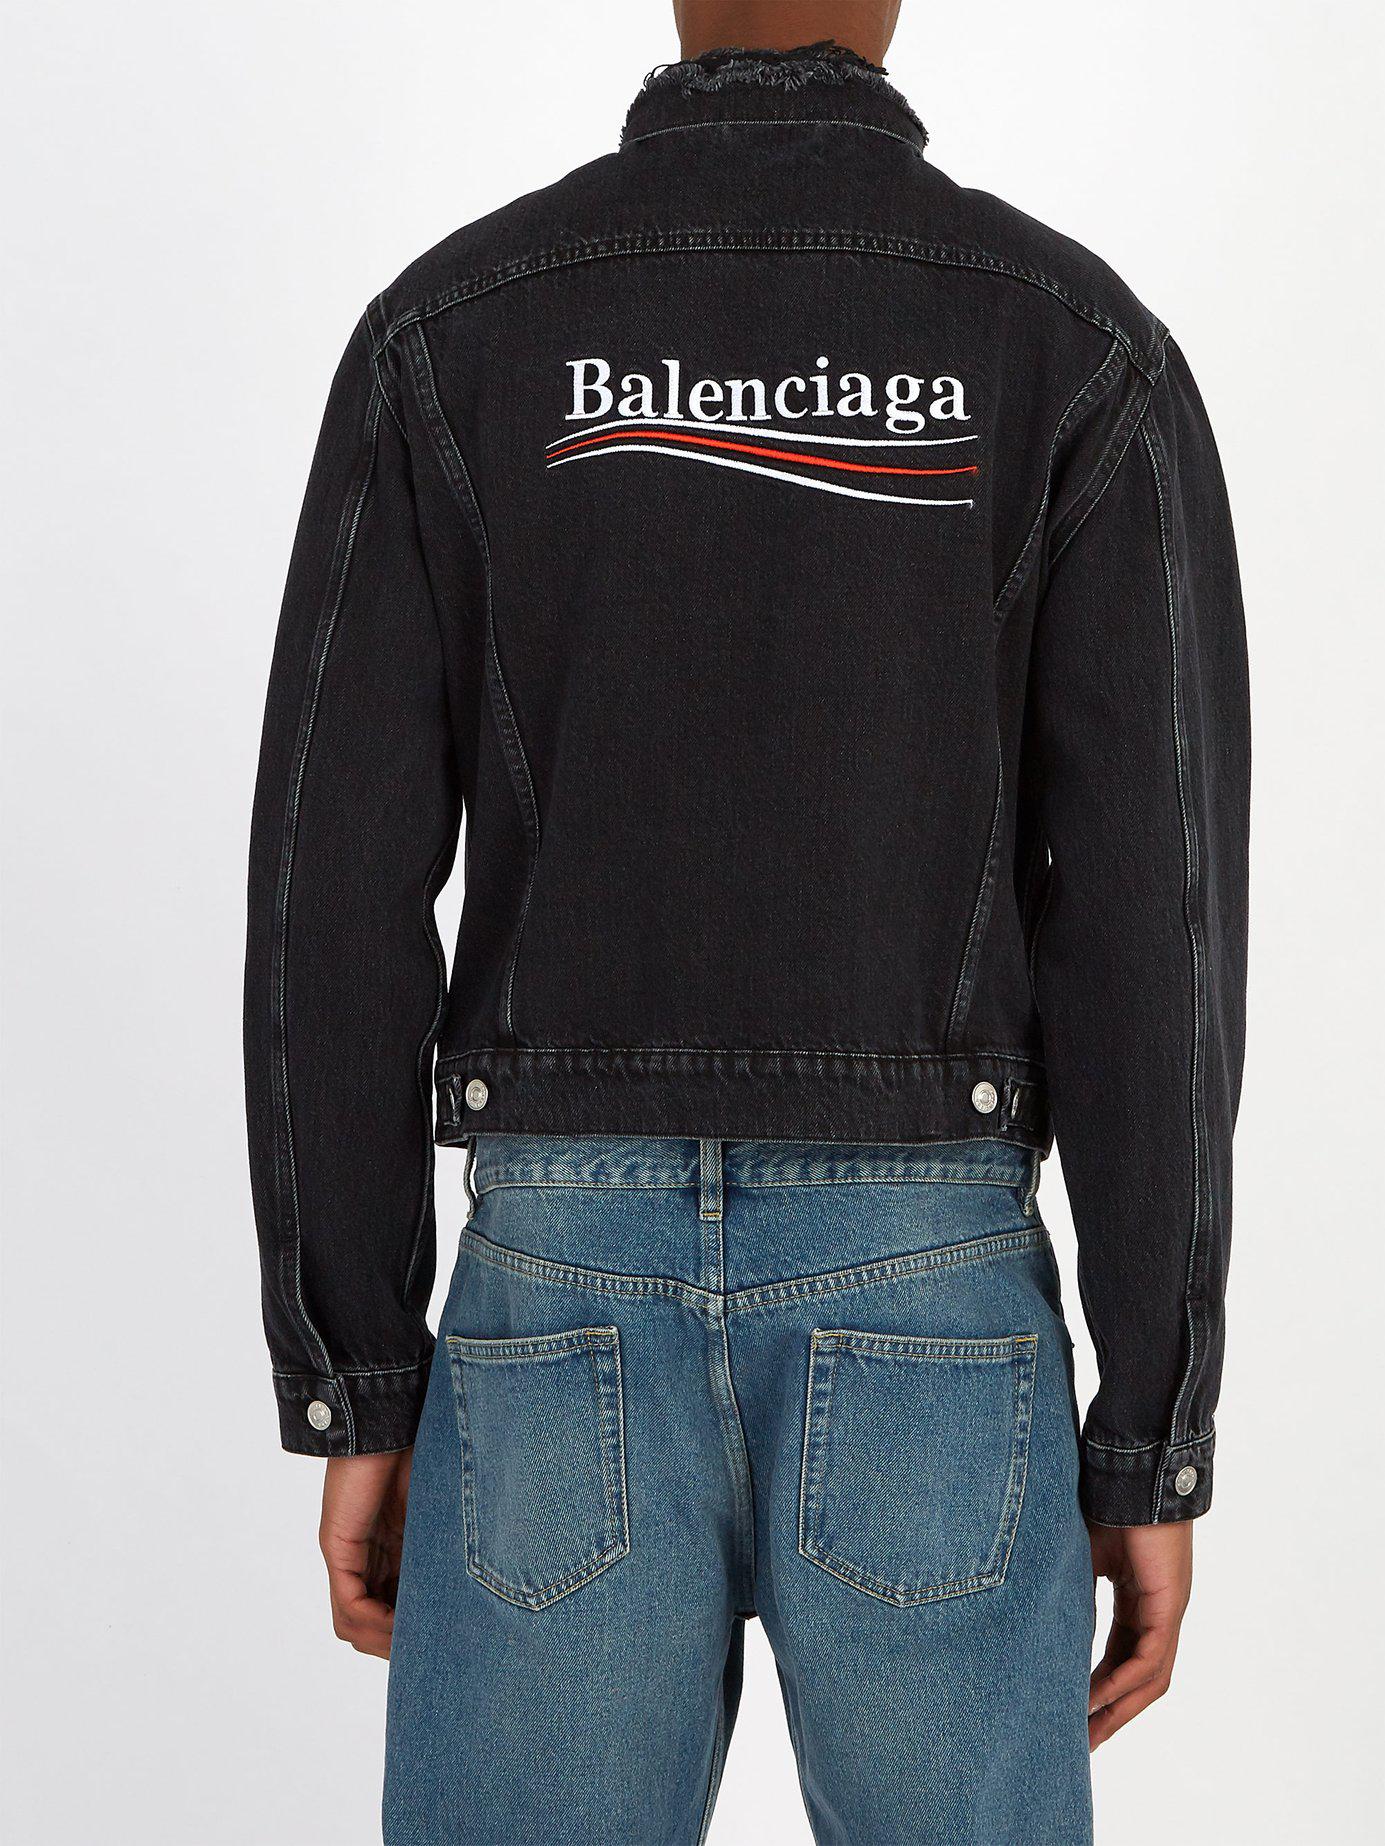 Balenciaga Distressed Denim Jacket in Black for Men | Lyst